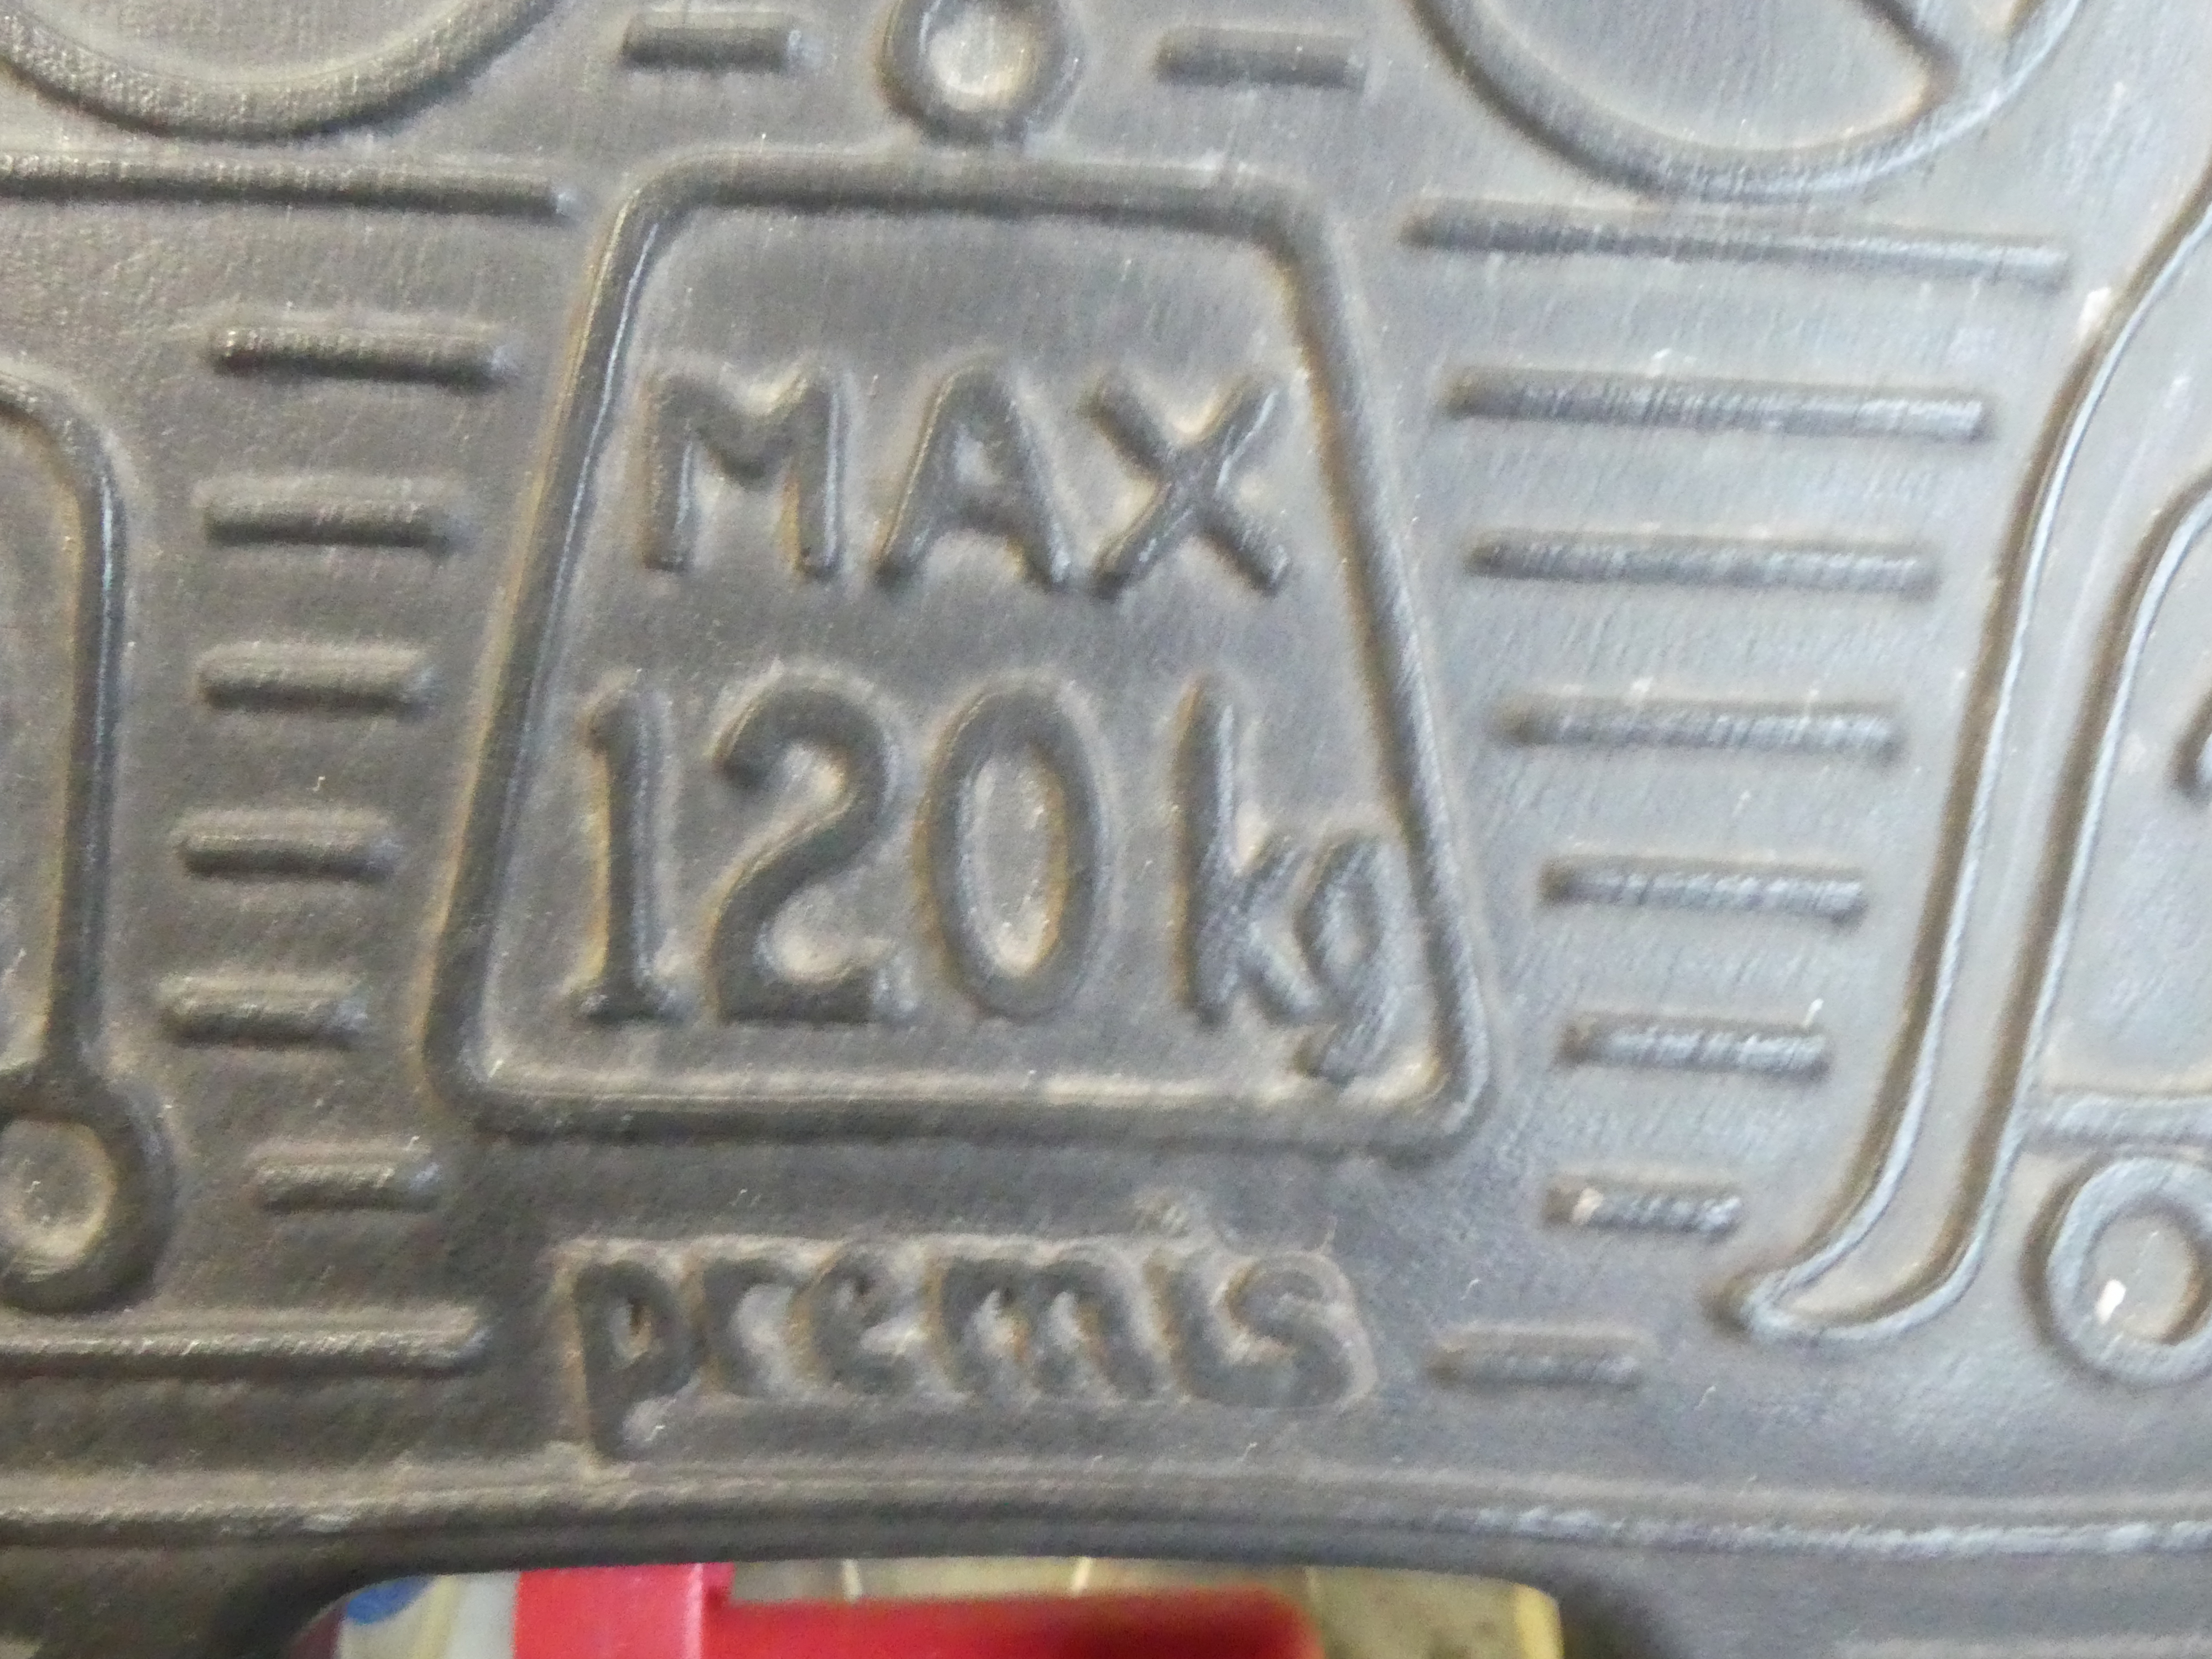 Premis Medical rollator max 120 kg